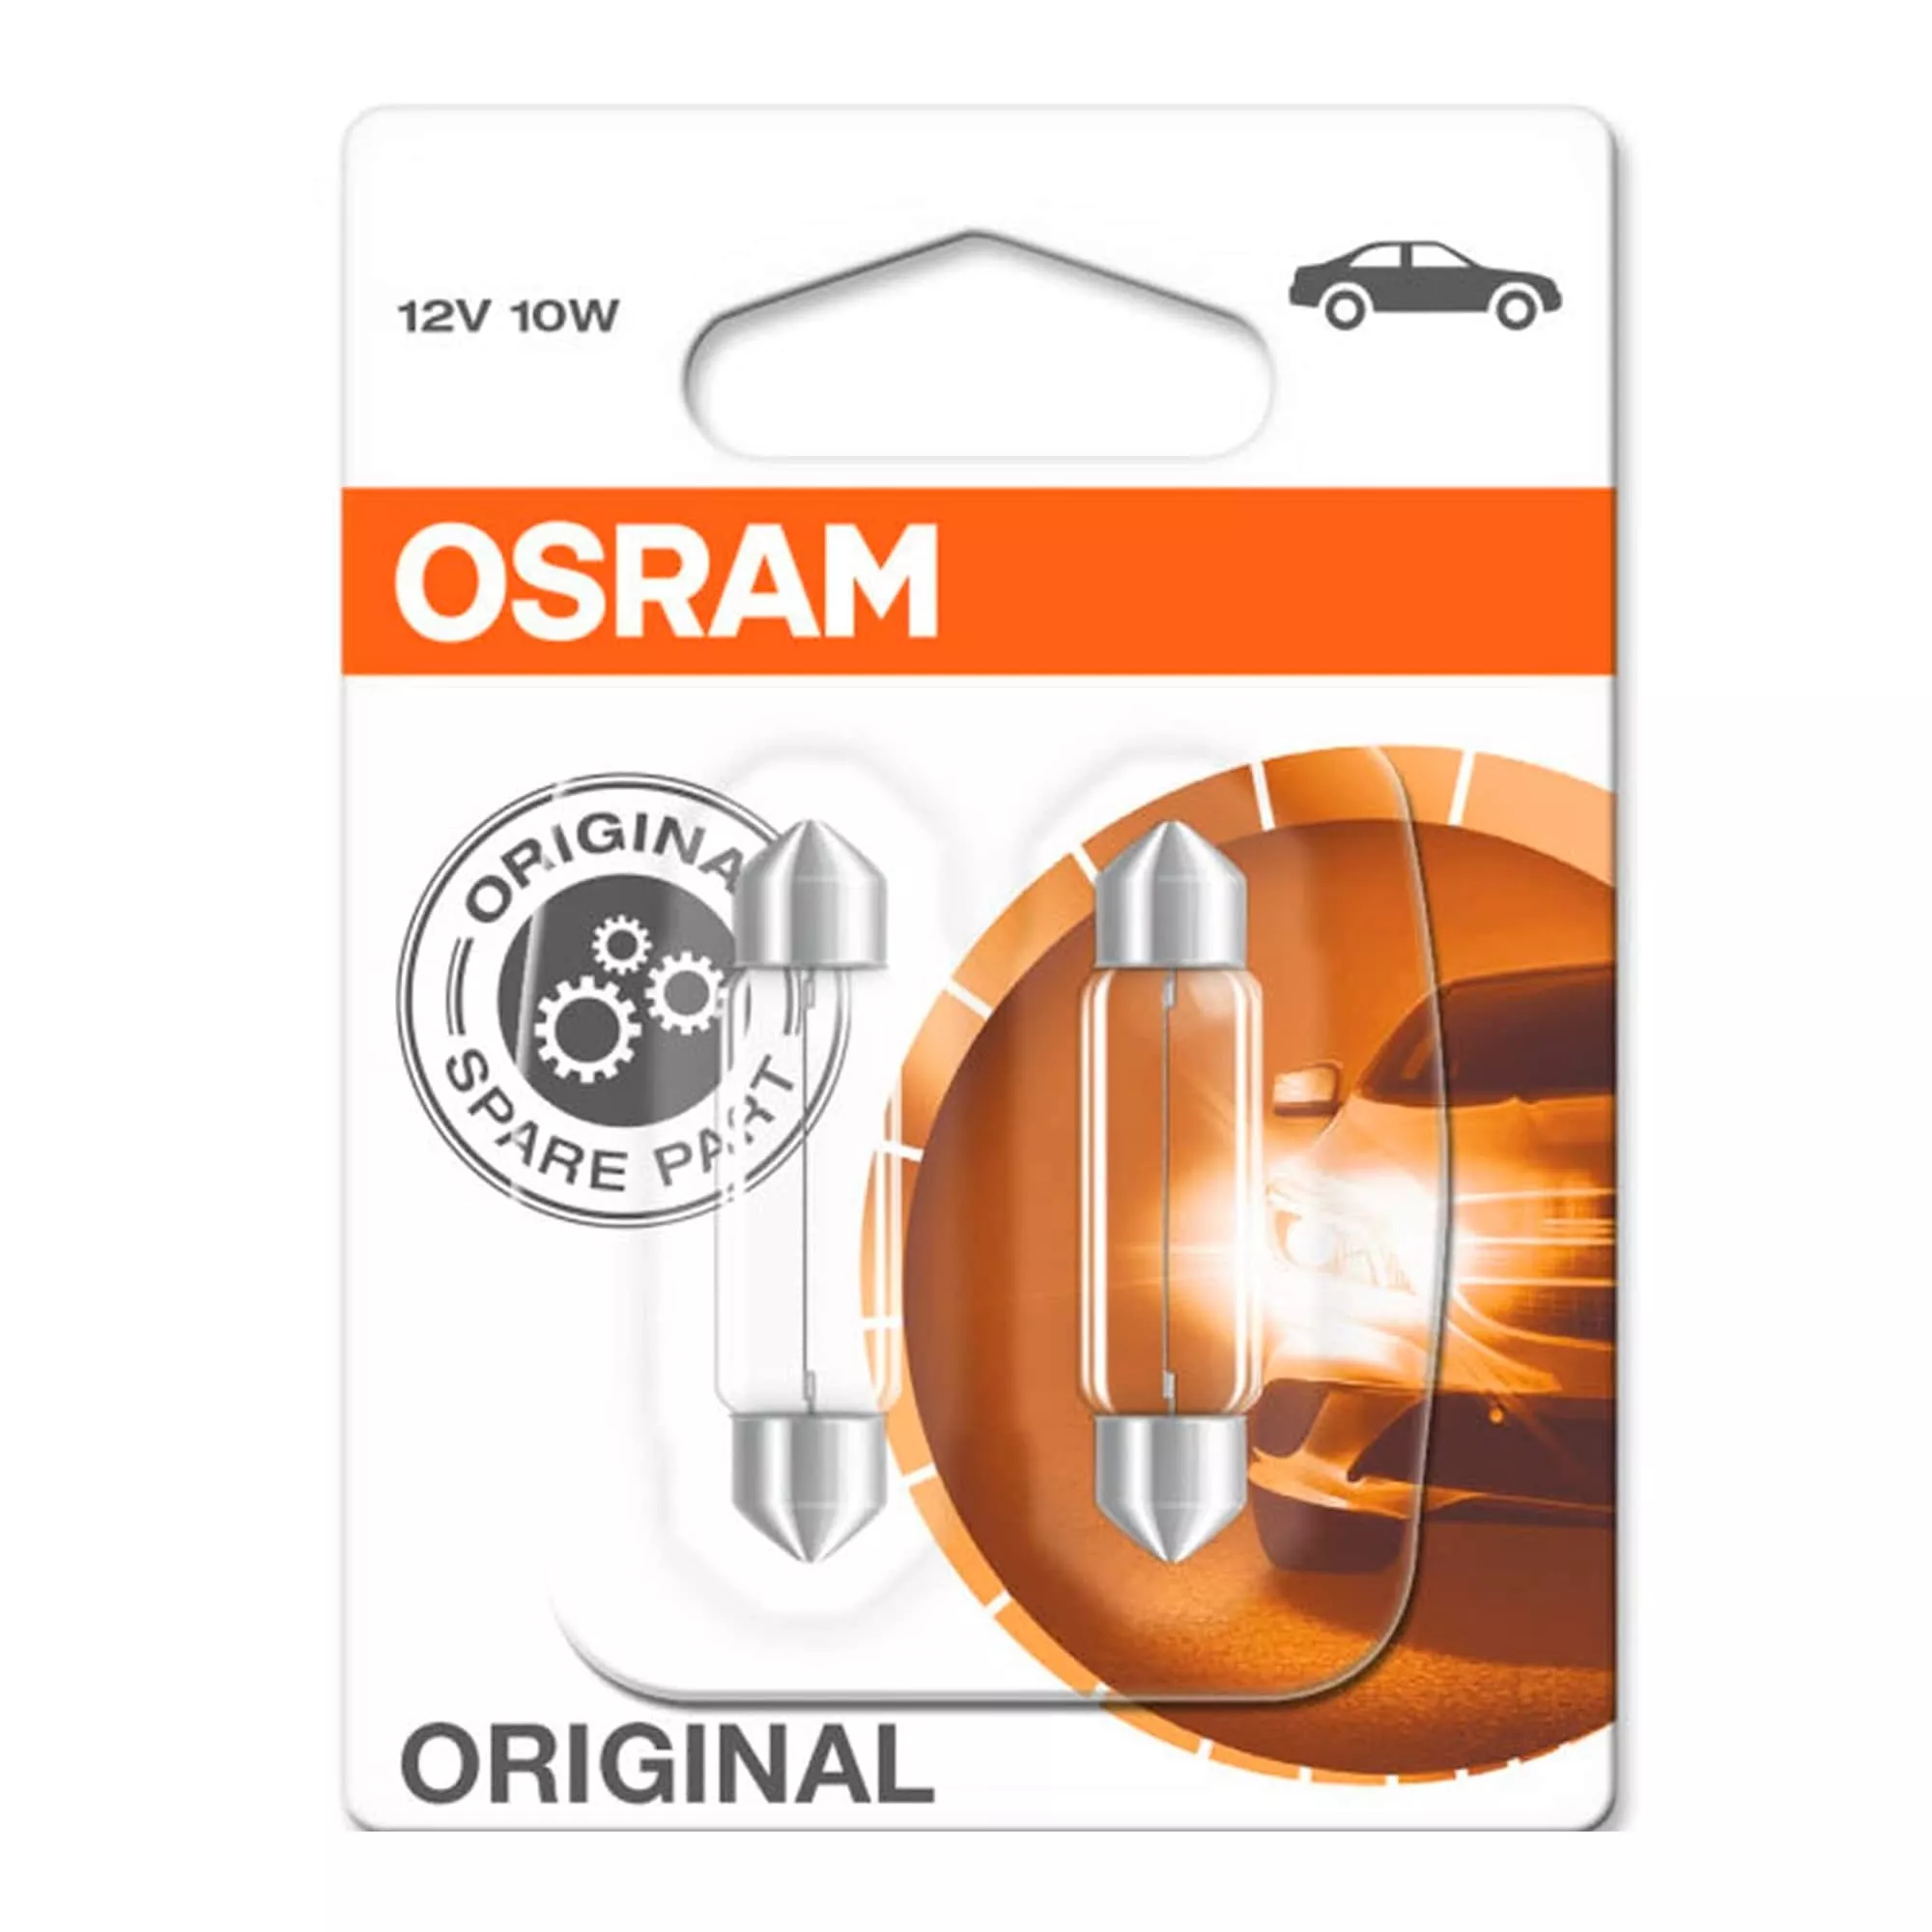 Лампа Osram Original C10W 12V 10W 6411_02B